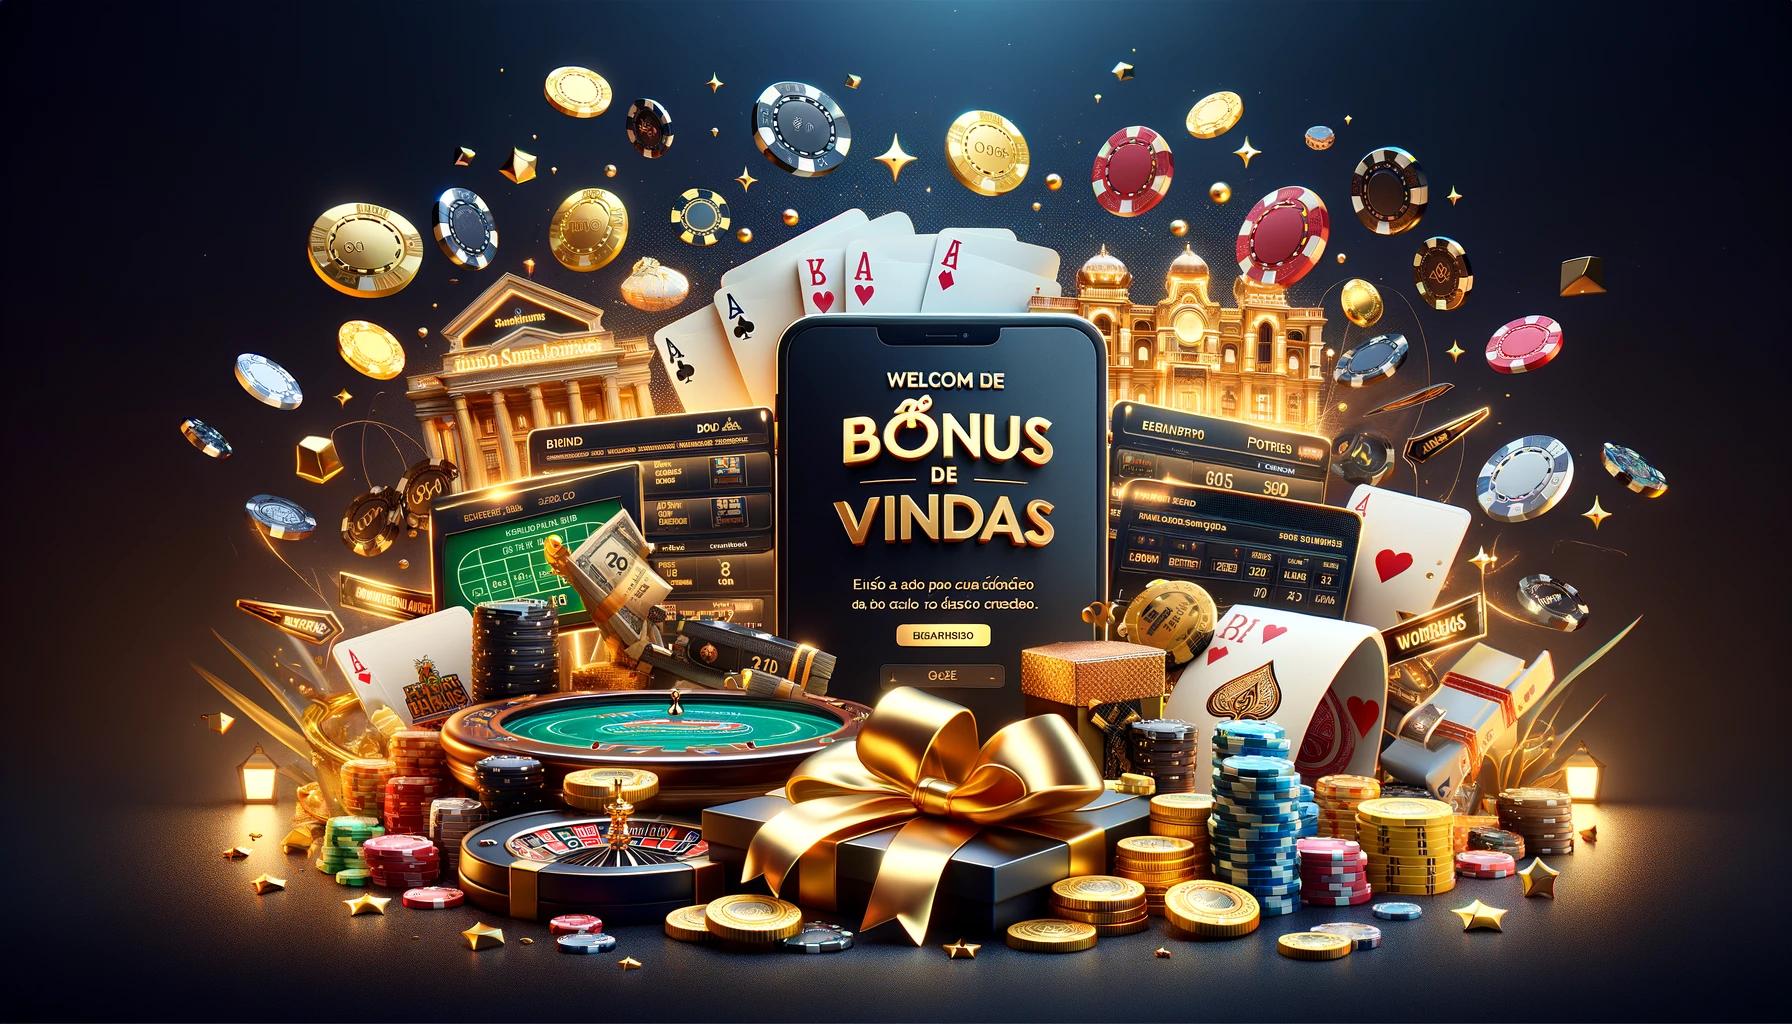 Casino com bonus gratis de boas vindas